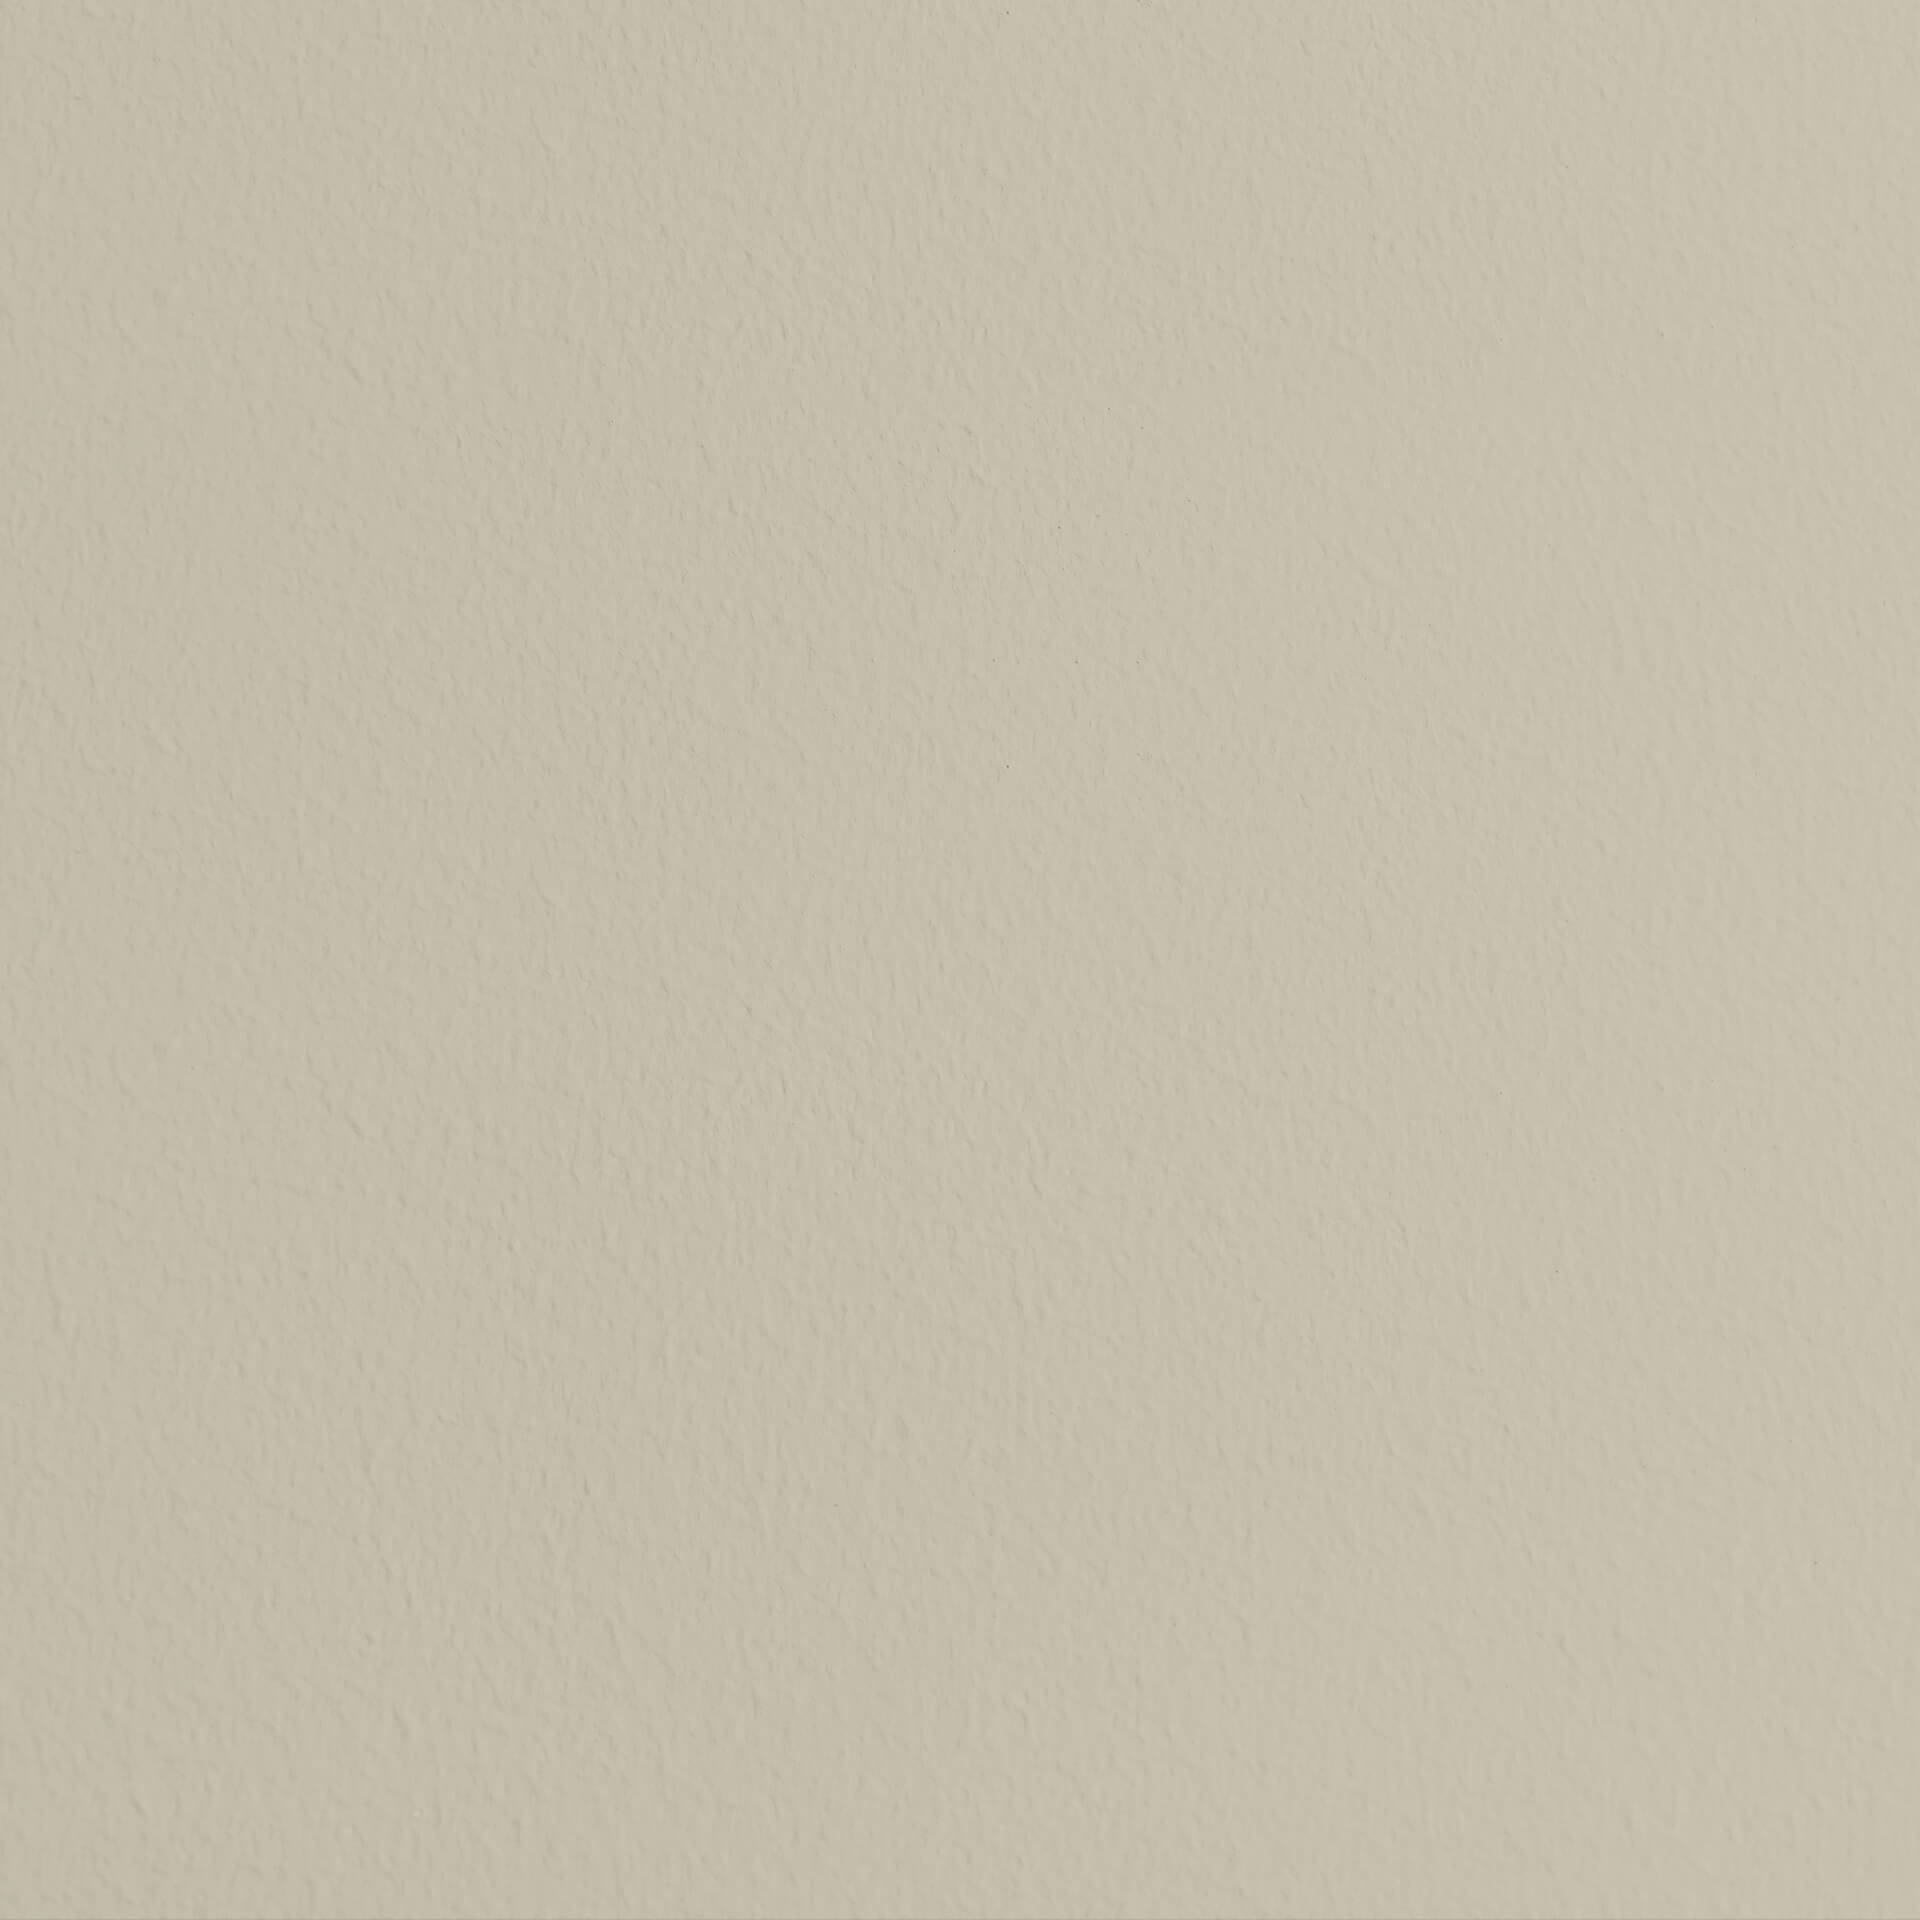 Mylands Flanders Grey No. 110 - Marble Matt Emulsion / Wandfarbe, 5L